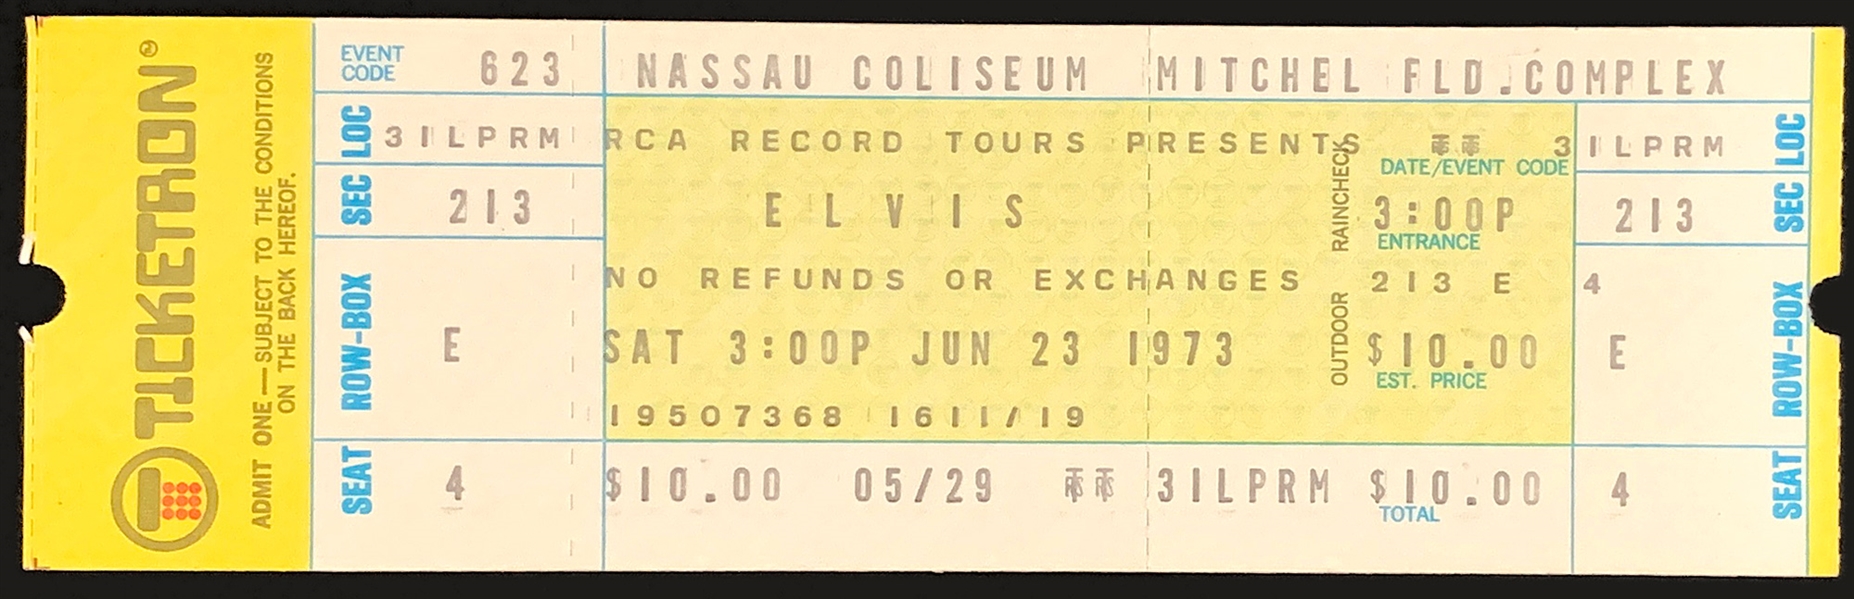 Elvis Presley FULL Ticket for June 23, 1973 Concert at Nassau Coliseum in Uniondale, NY